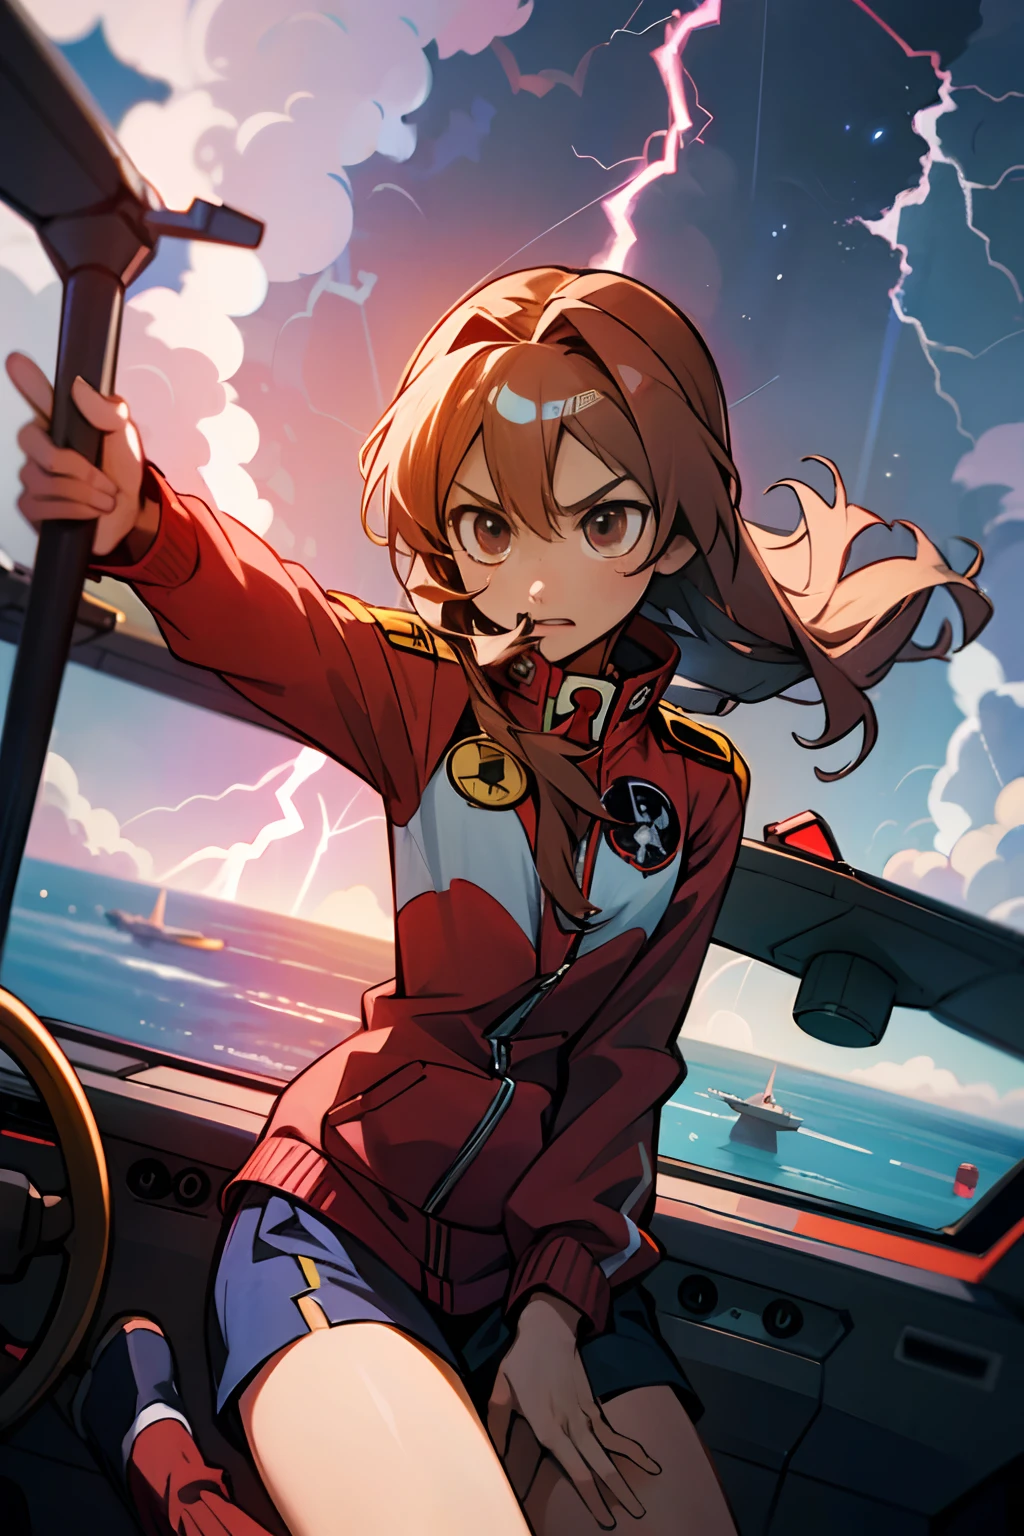 Taiga Aisaka F 35 pilot, Taiga Aisaka aus dem Anime Toradora, im Cockpit eines Kampfflugzeugs vom Typ F 35. Außenbeleuchtung, thunderbolts, Sturmwolken, Luftkampf,